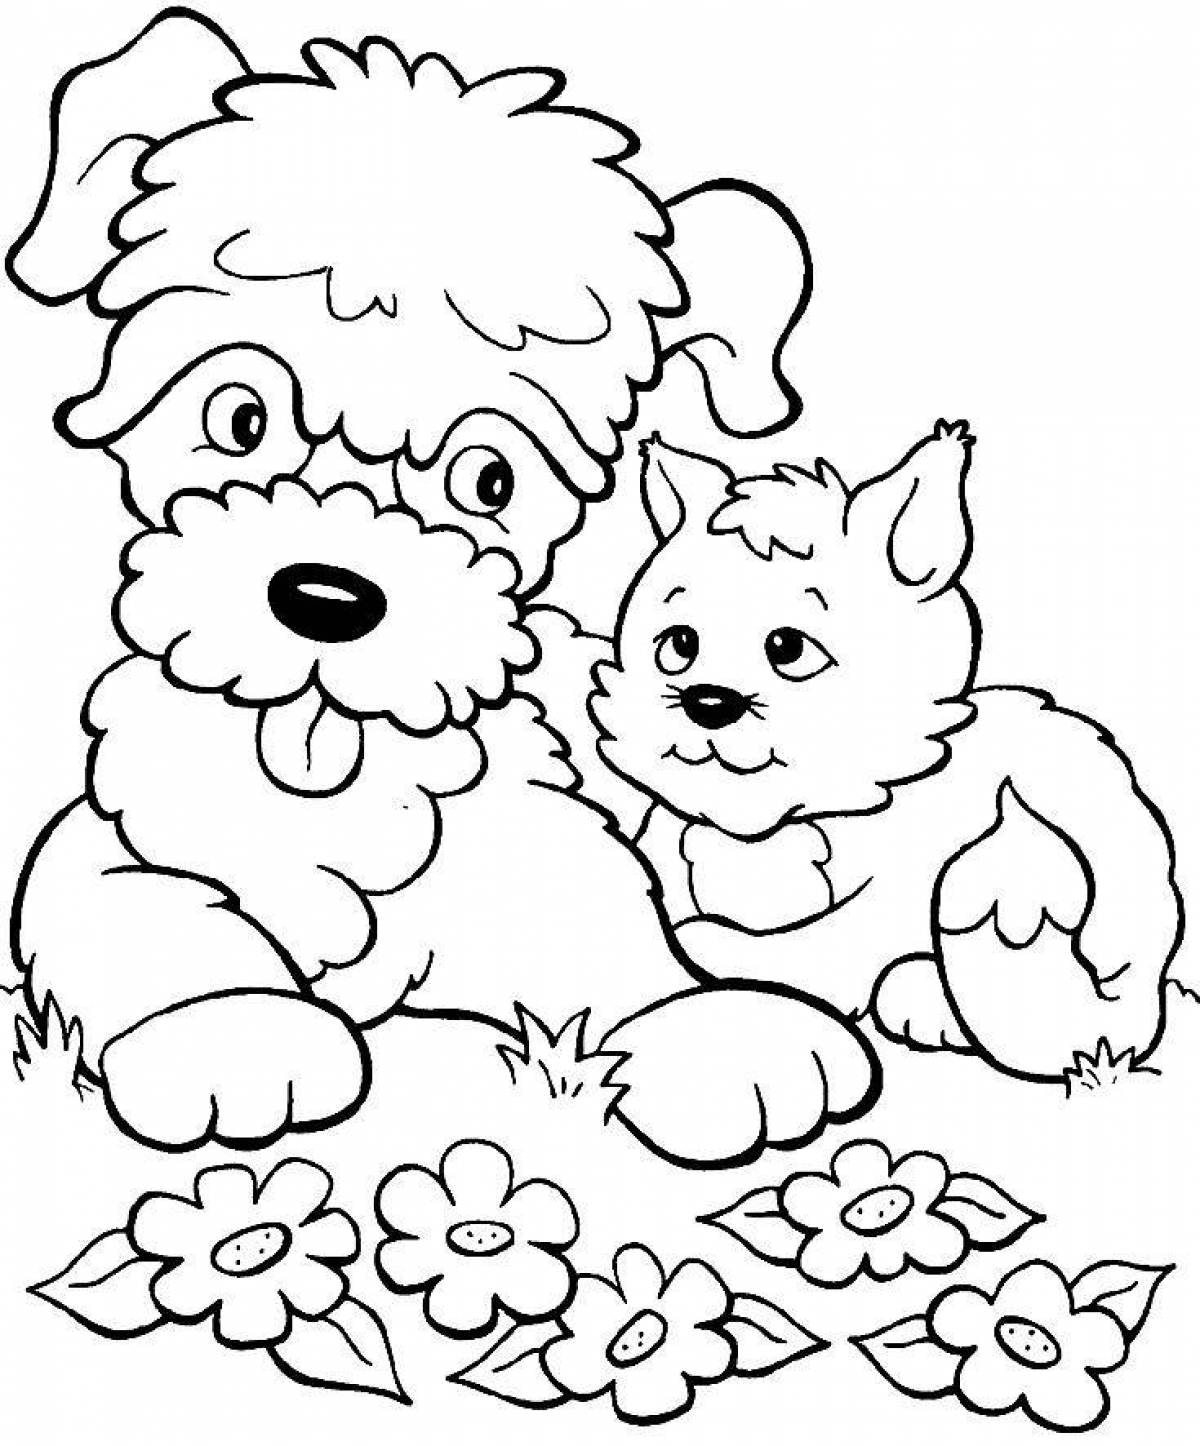 Joyful animal coloring page for kids